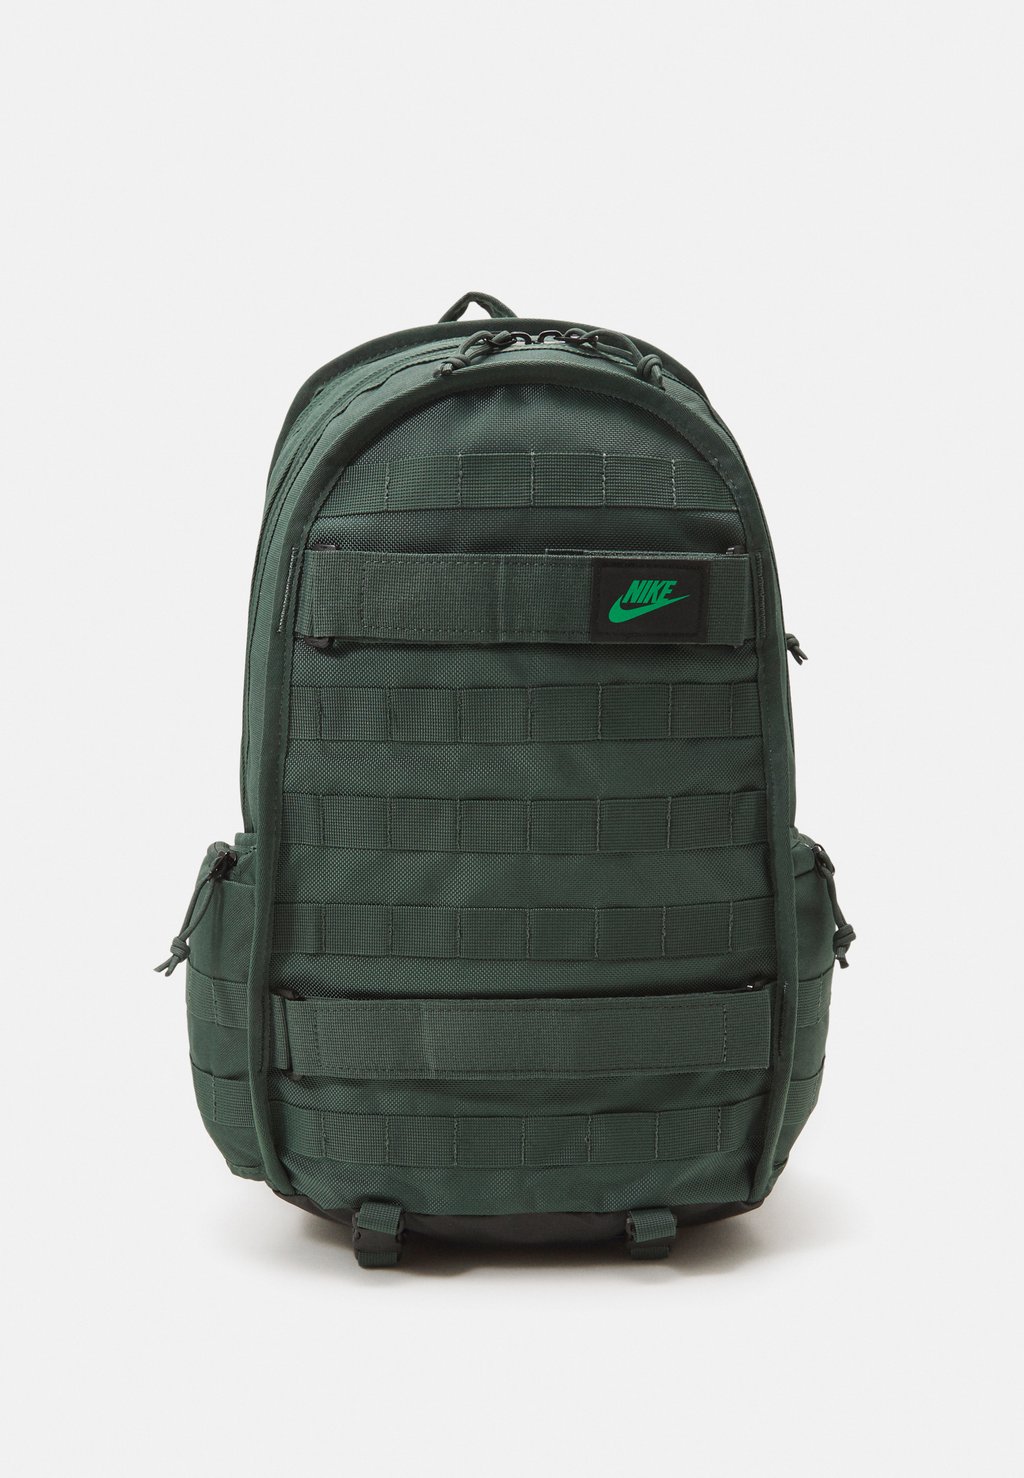 Рюкзак Unisex Nike, цвет vintage green/black/stadium green cyberpunk black green